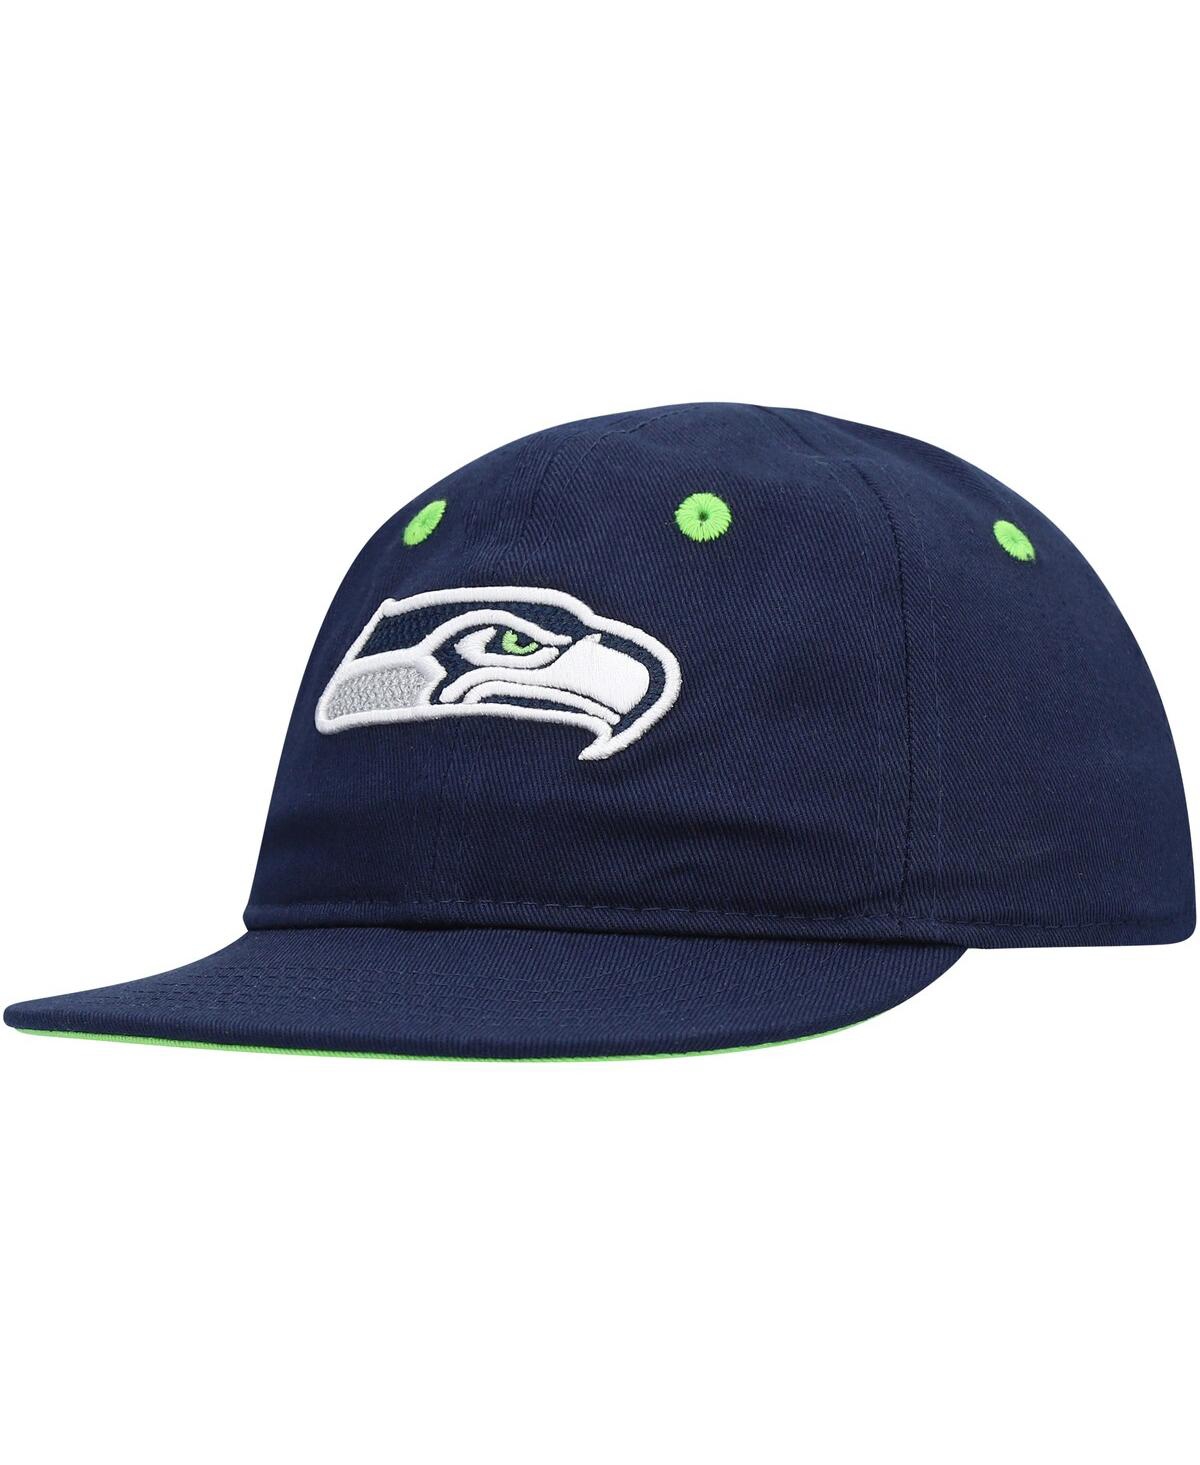 Shop Outerstuff Newborn Infant Unisex College Navy Seattle Seahawks Slouch Flex Hat